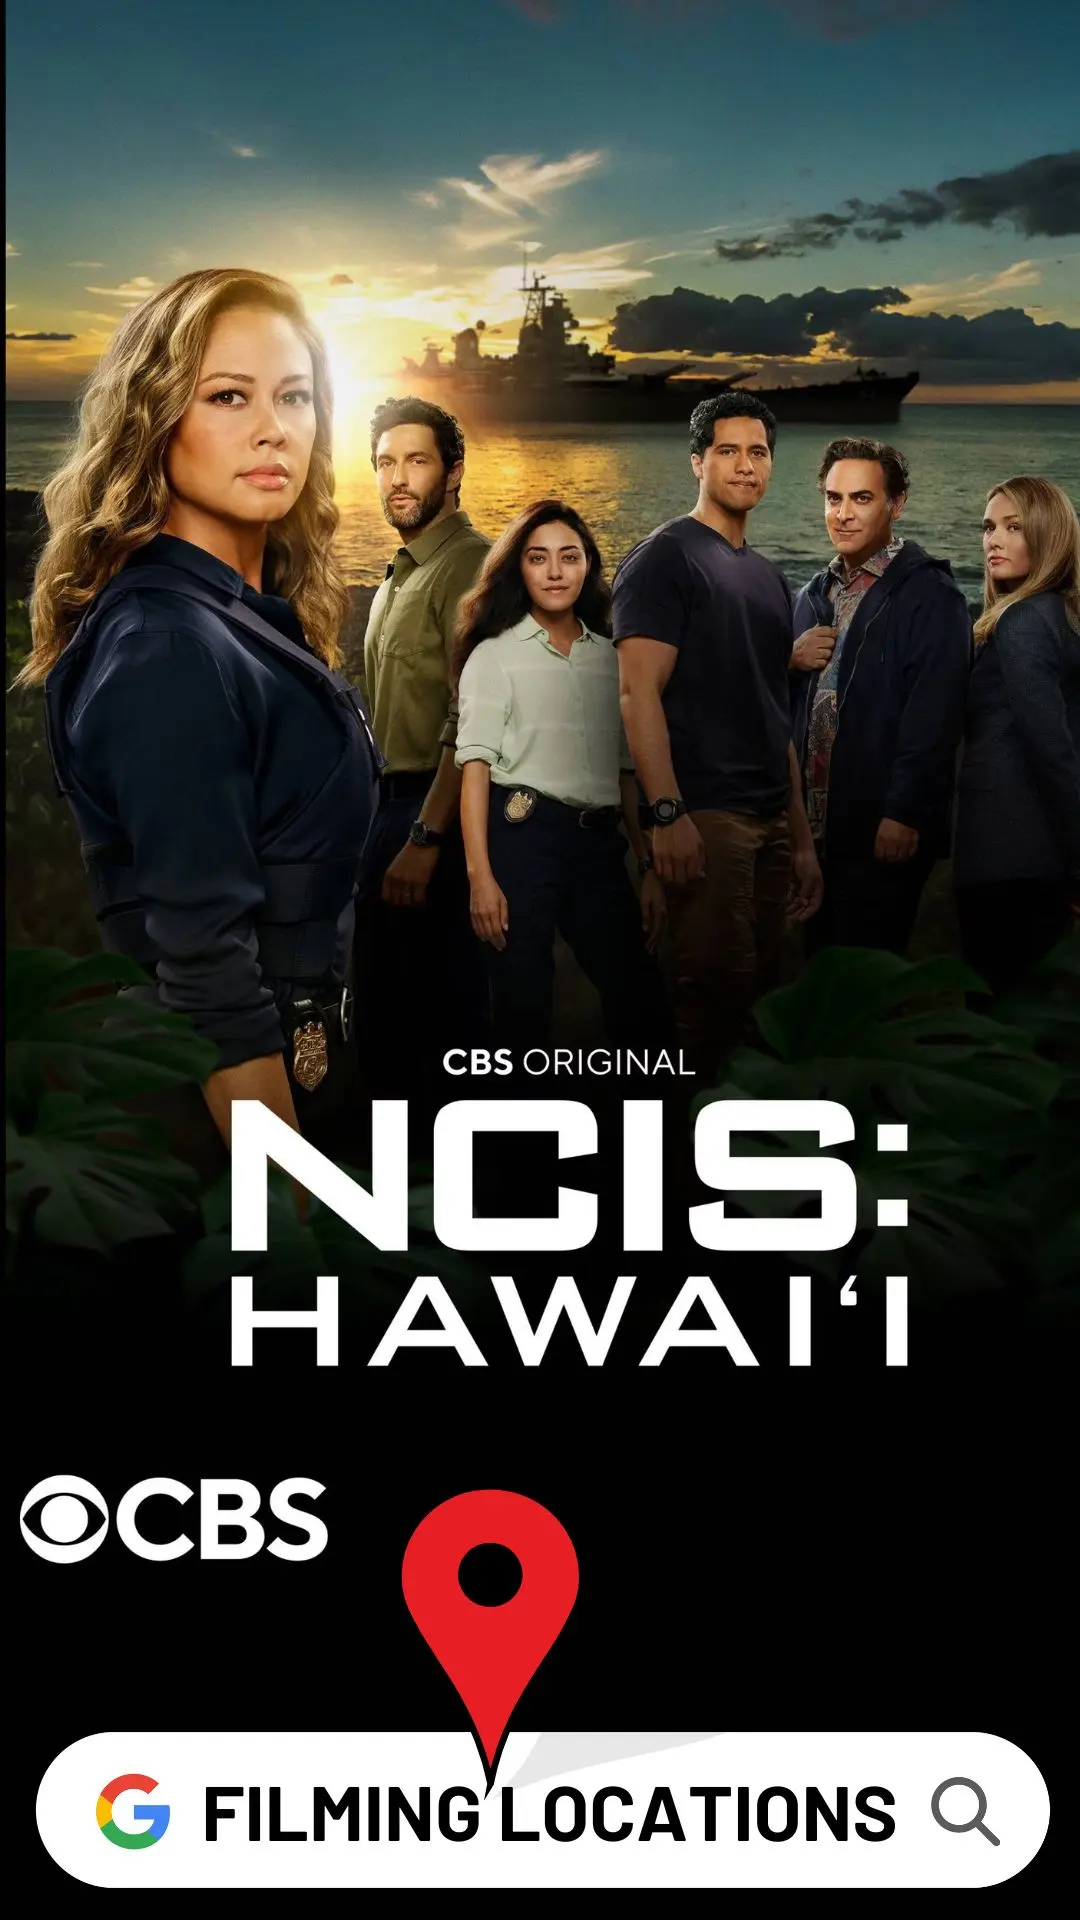 NCIS Hawai'i Season 3 Filming Locations